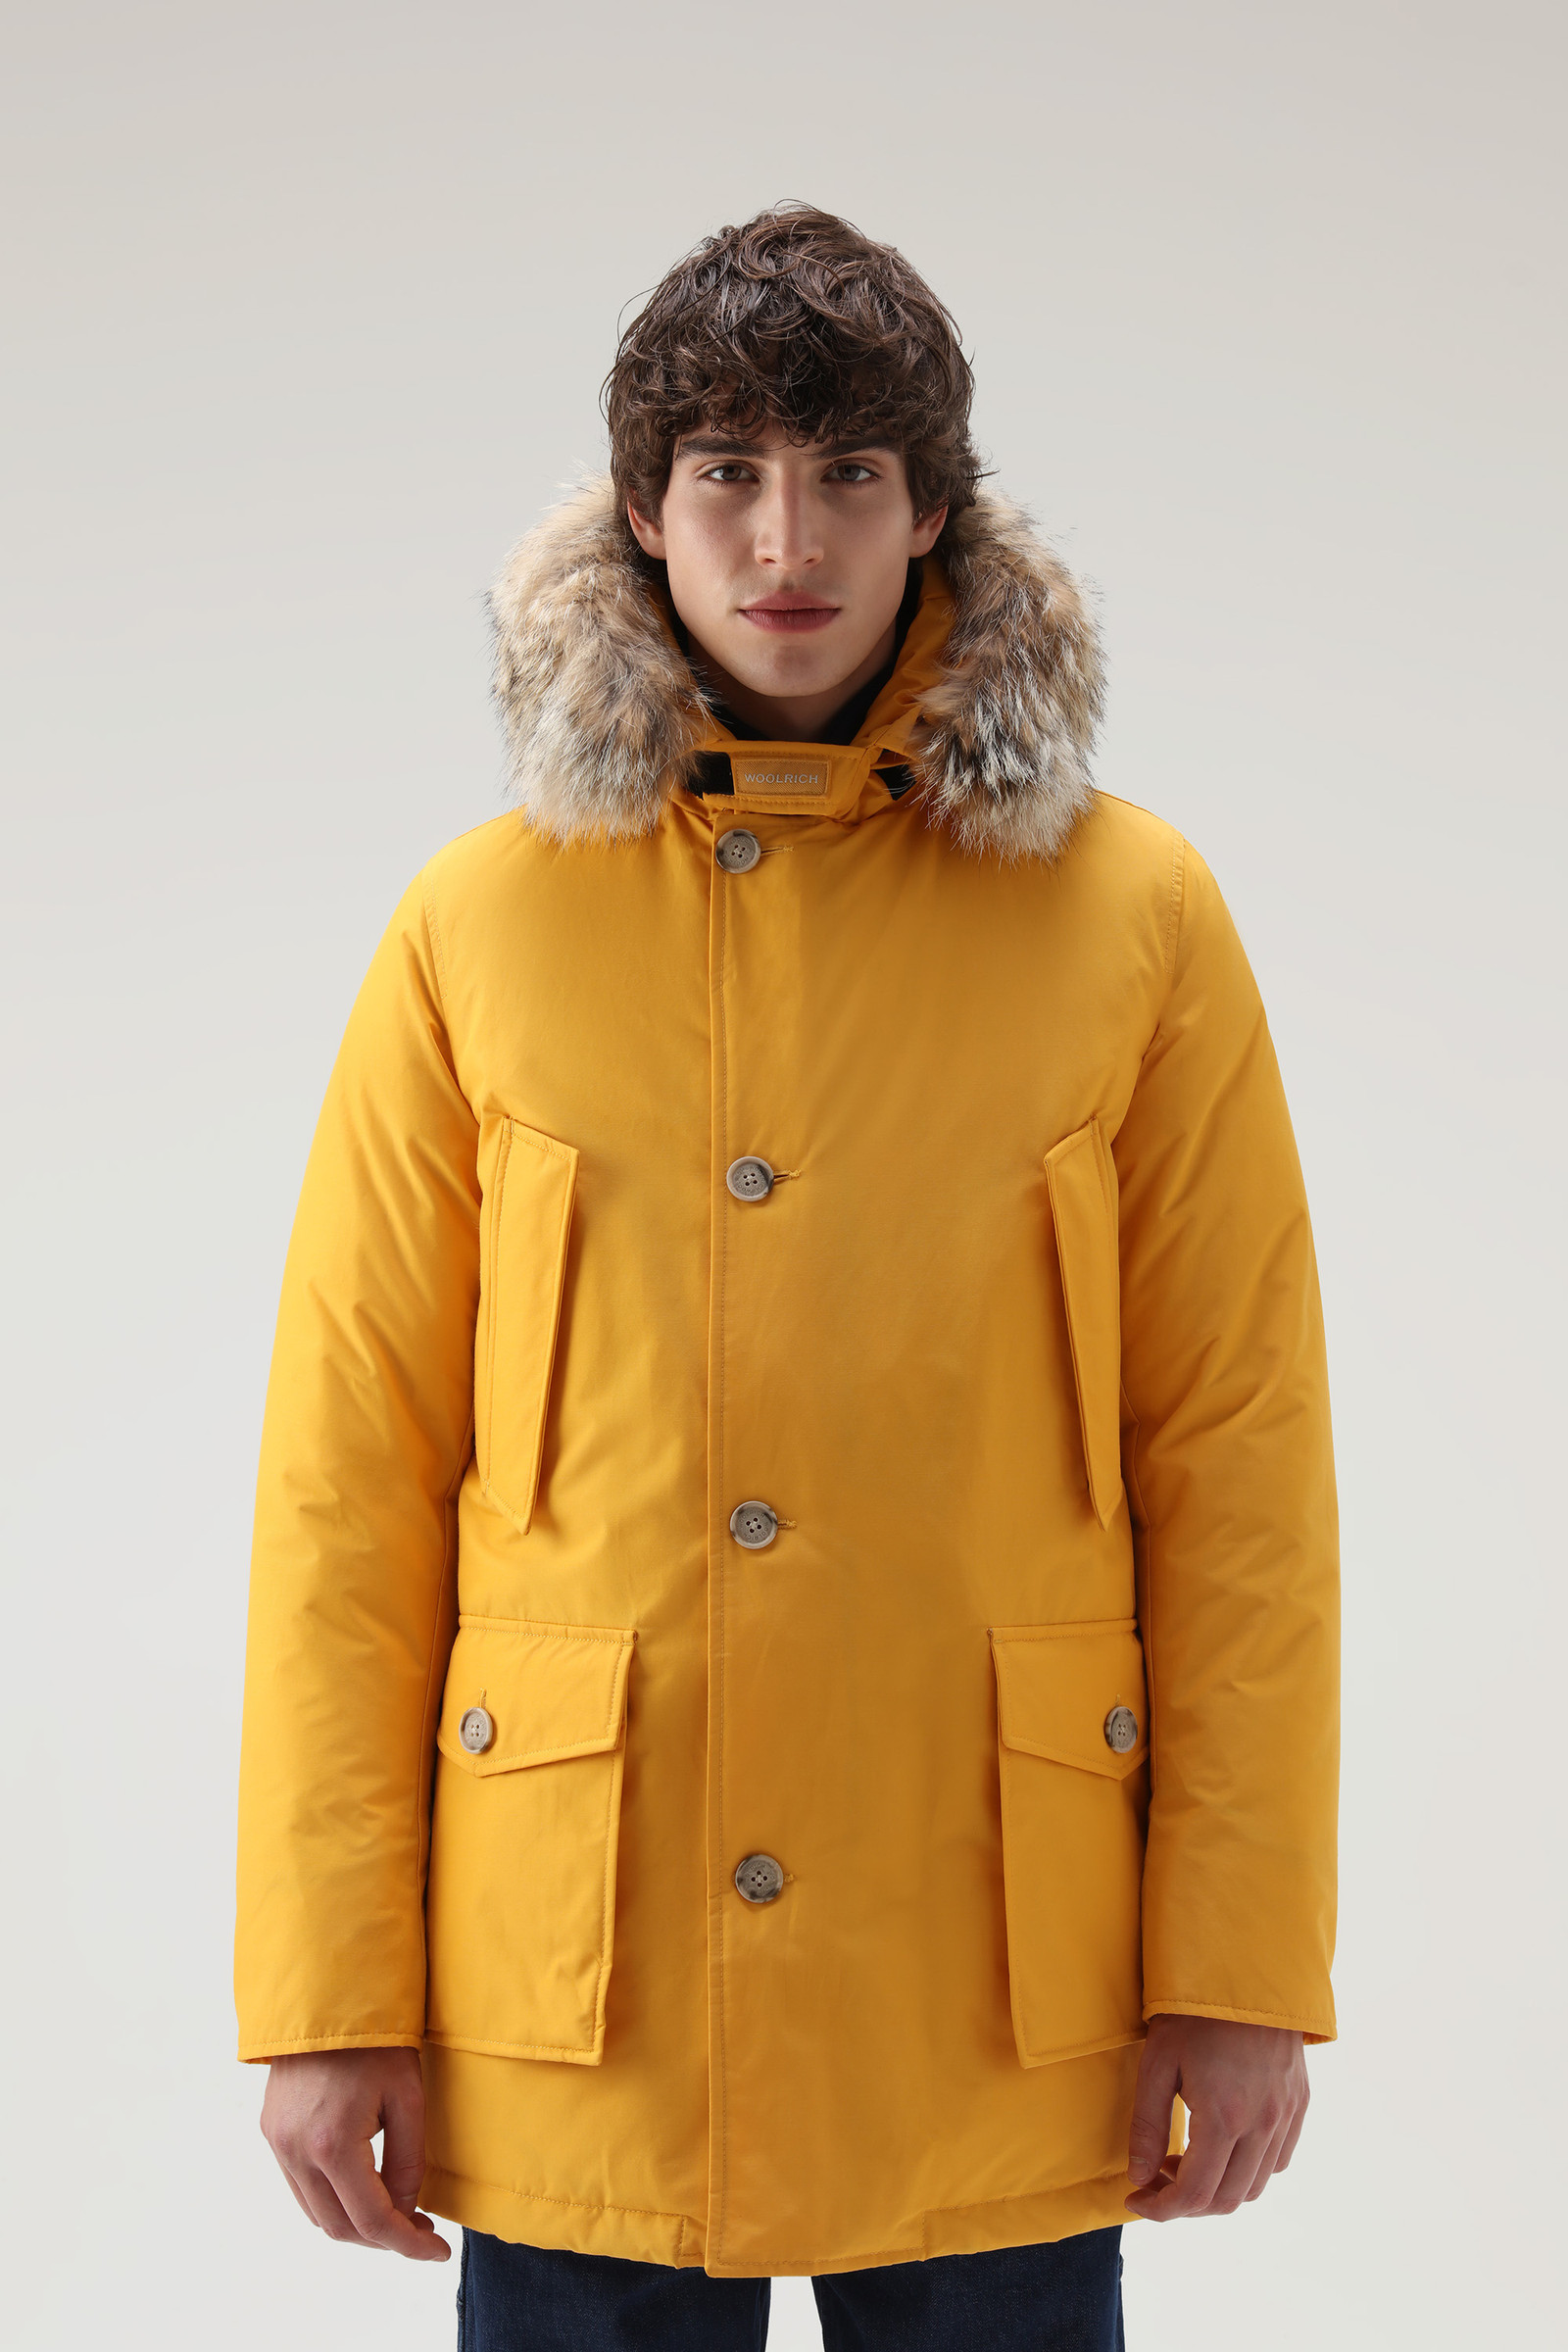 Arctic Parka in Ramar Cloth with Detachable Fur Trim - Men - Yellow